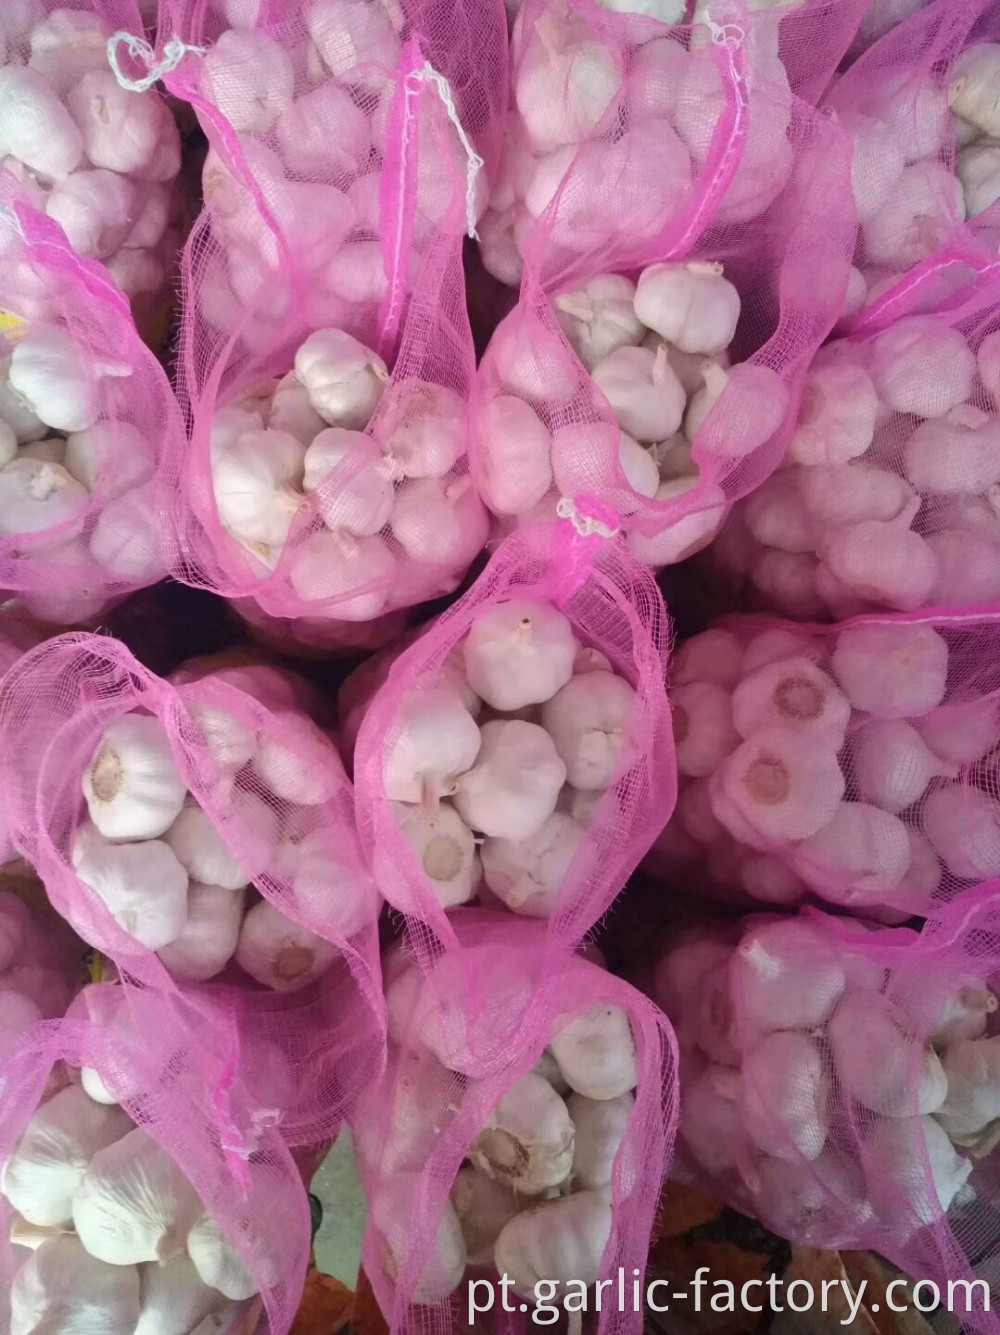 Cheap and good fresh garlic in 10kg bags